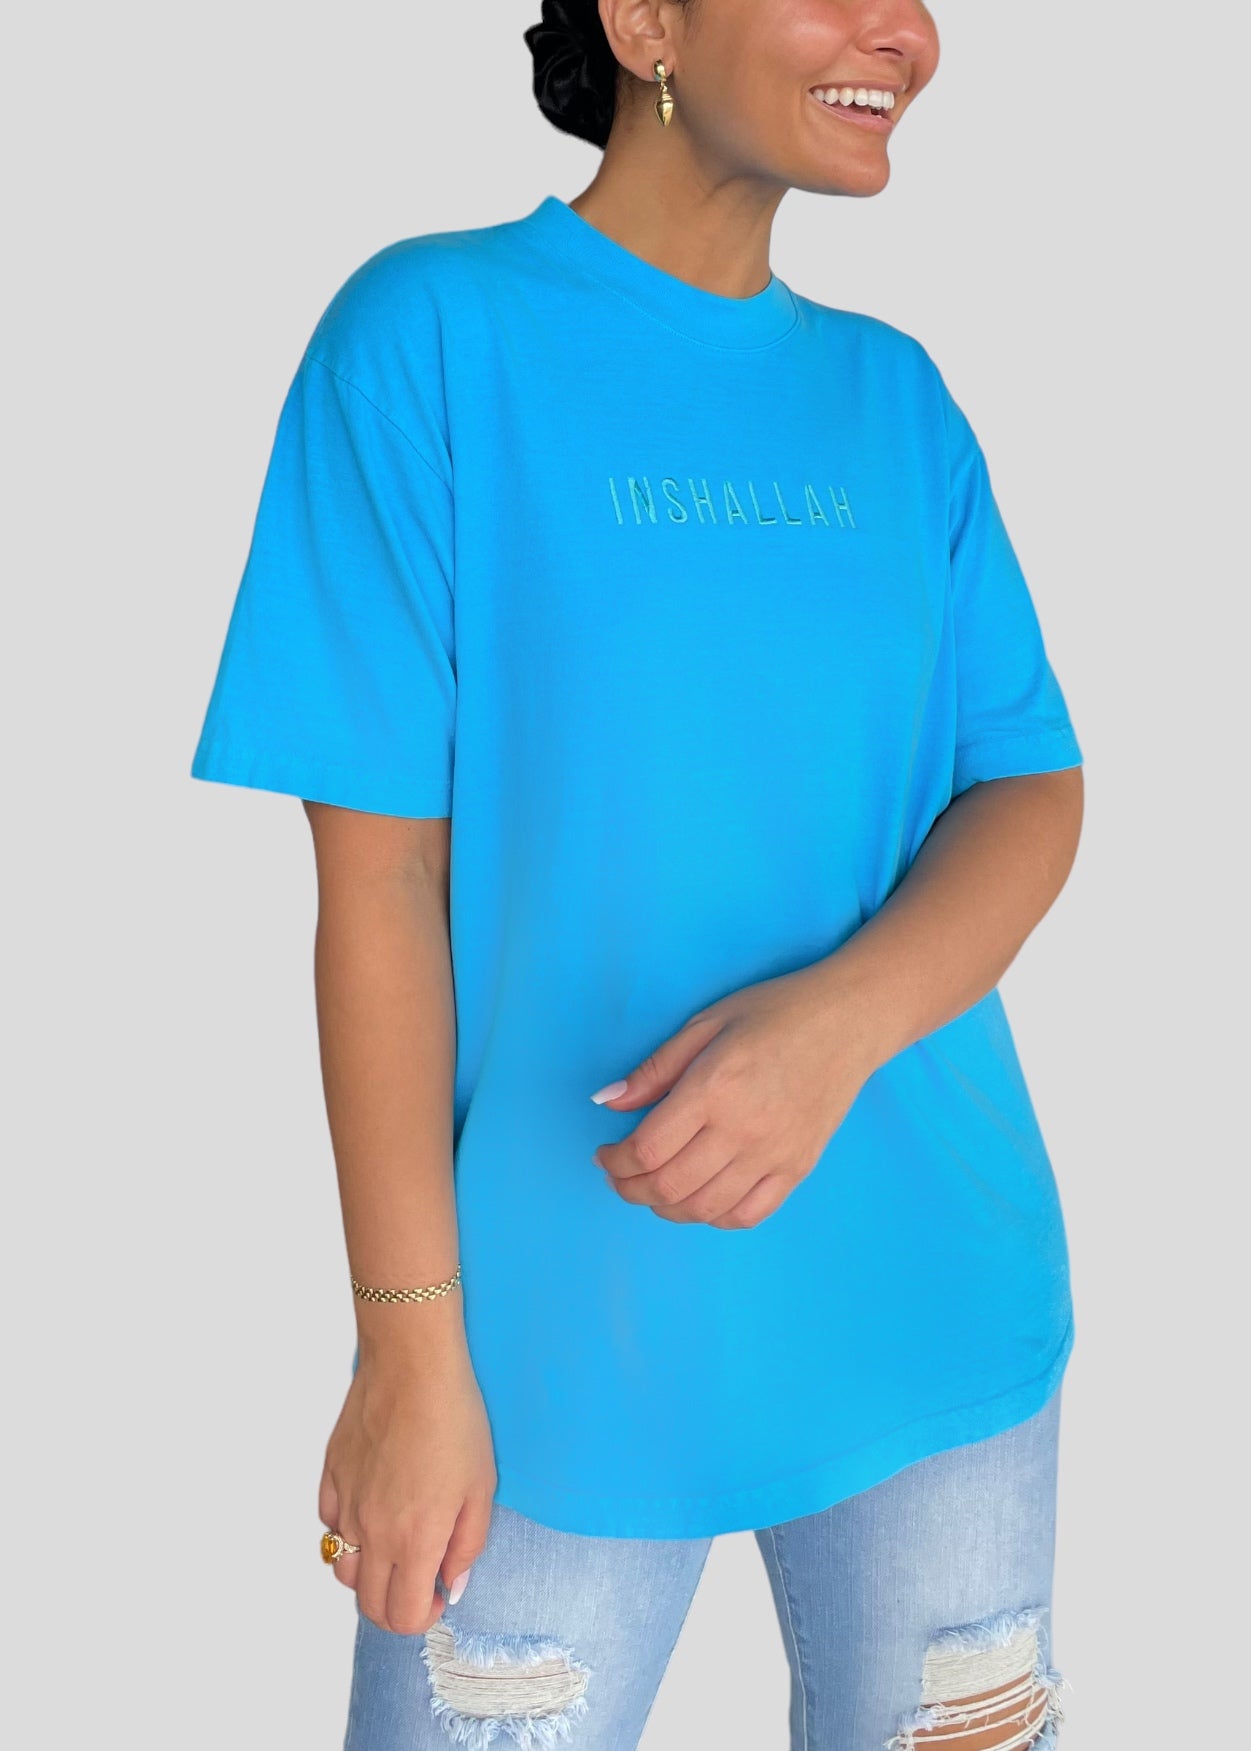 Embroidered Neon Inshallah T-Shirts